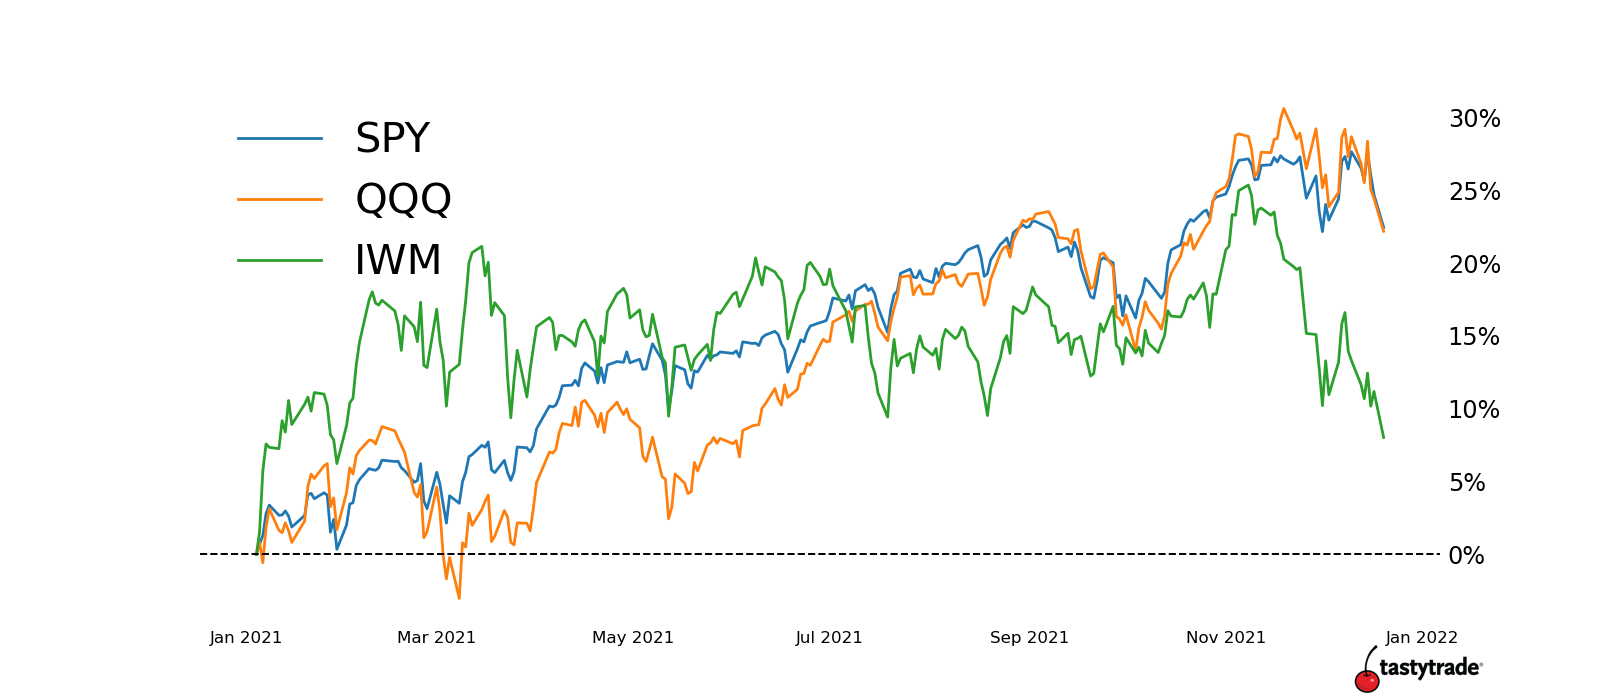 Graph of SPY, QQQ, IWM from Jan 2021 to Nov 2021